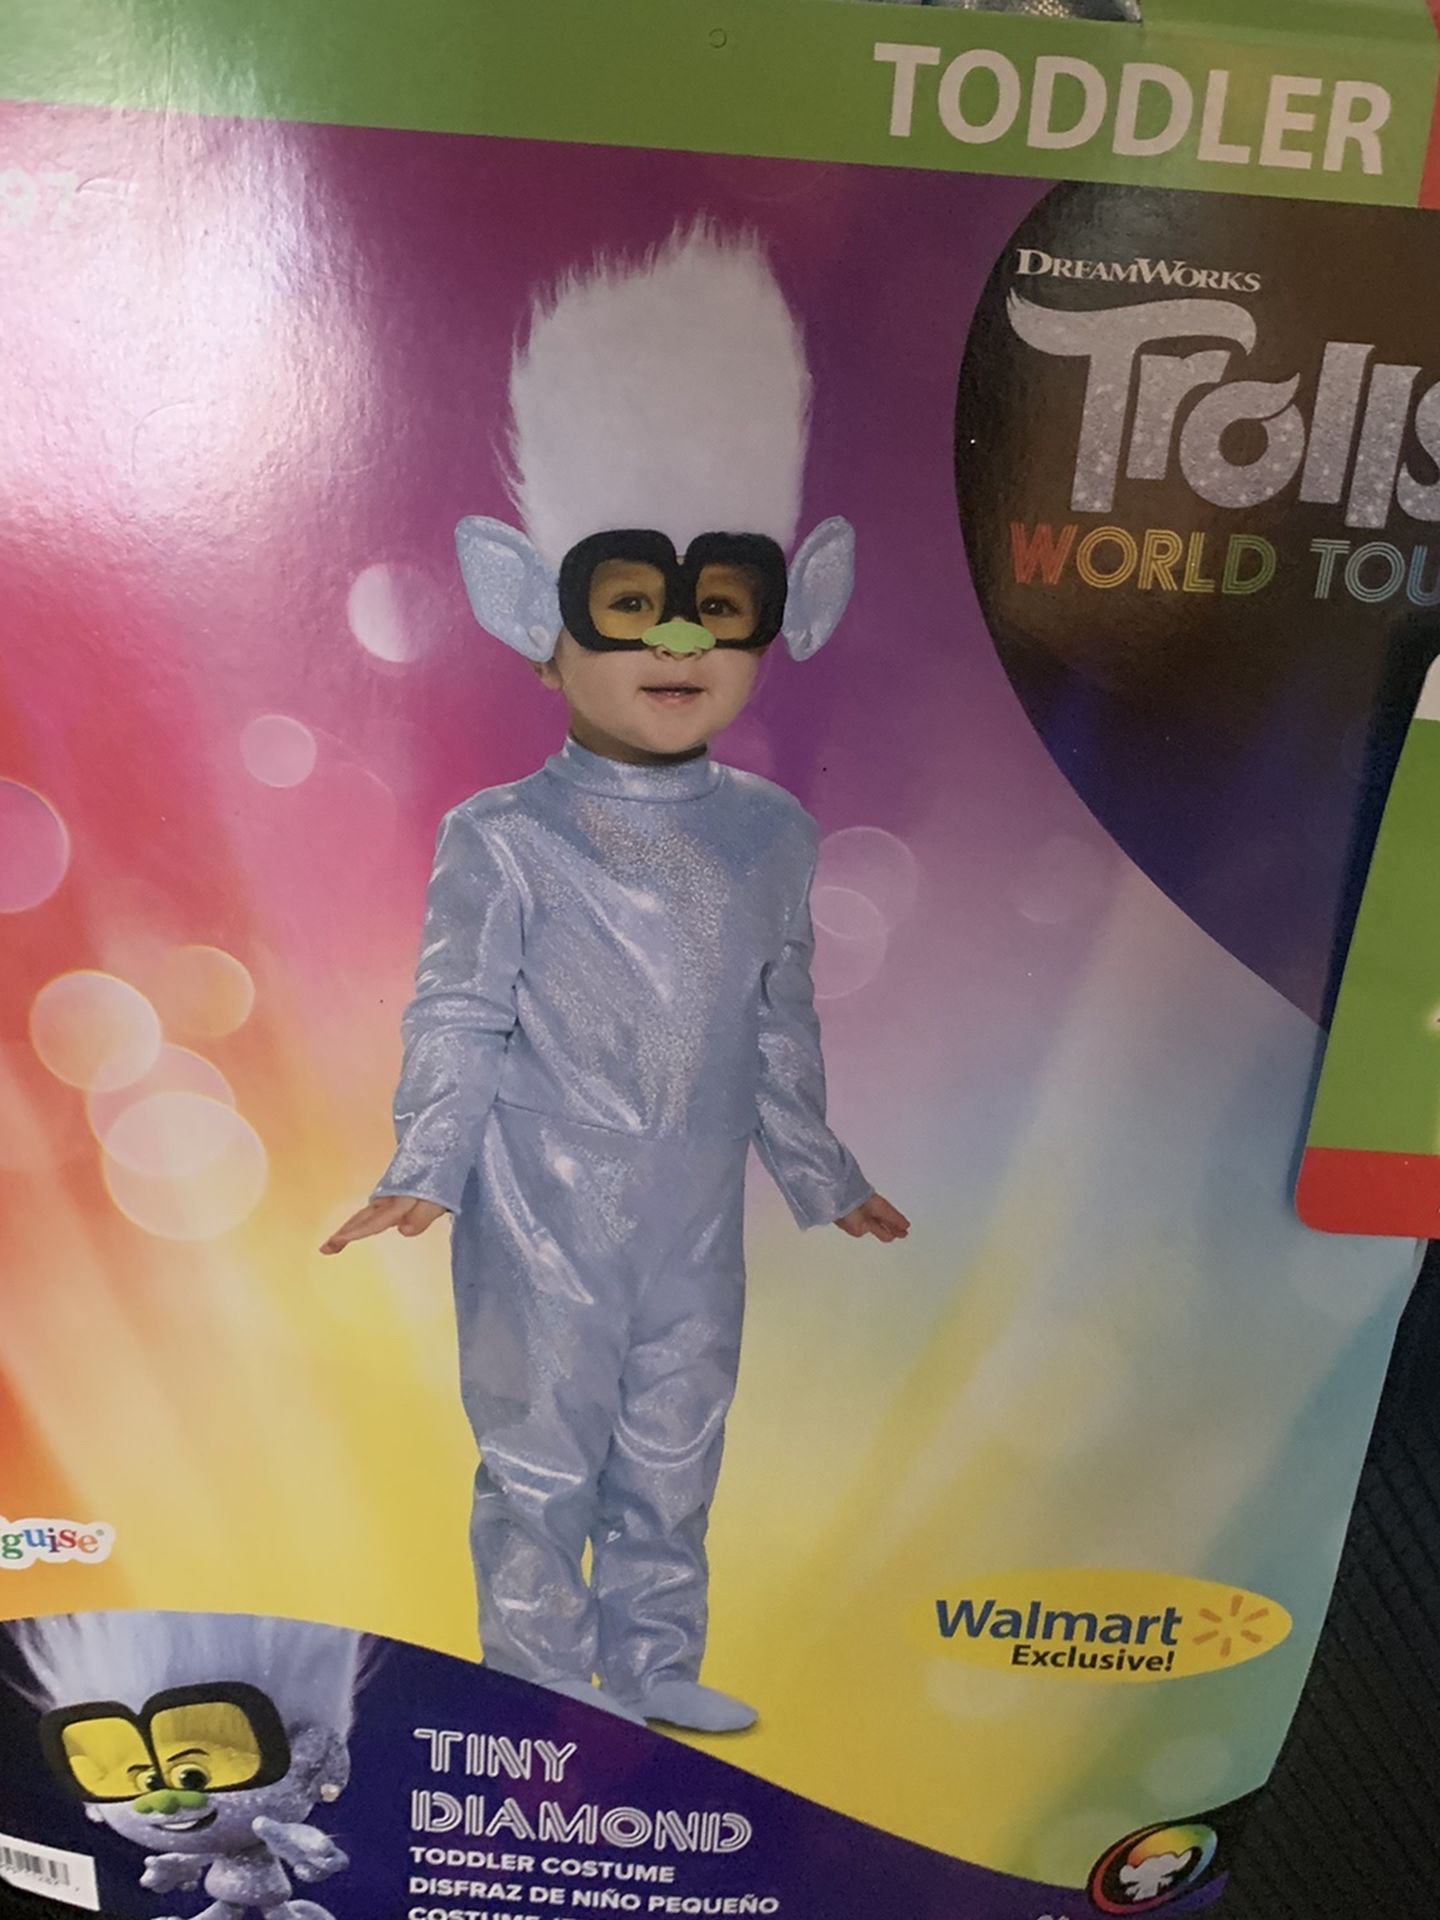 Trolls World Tour Costume